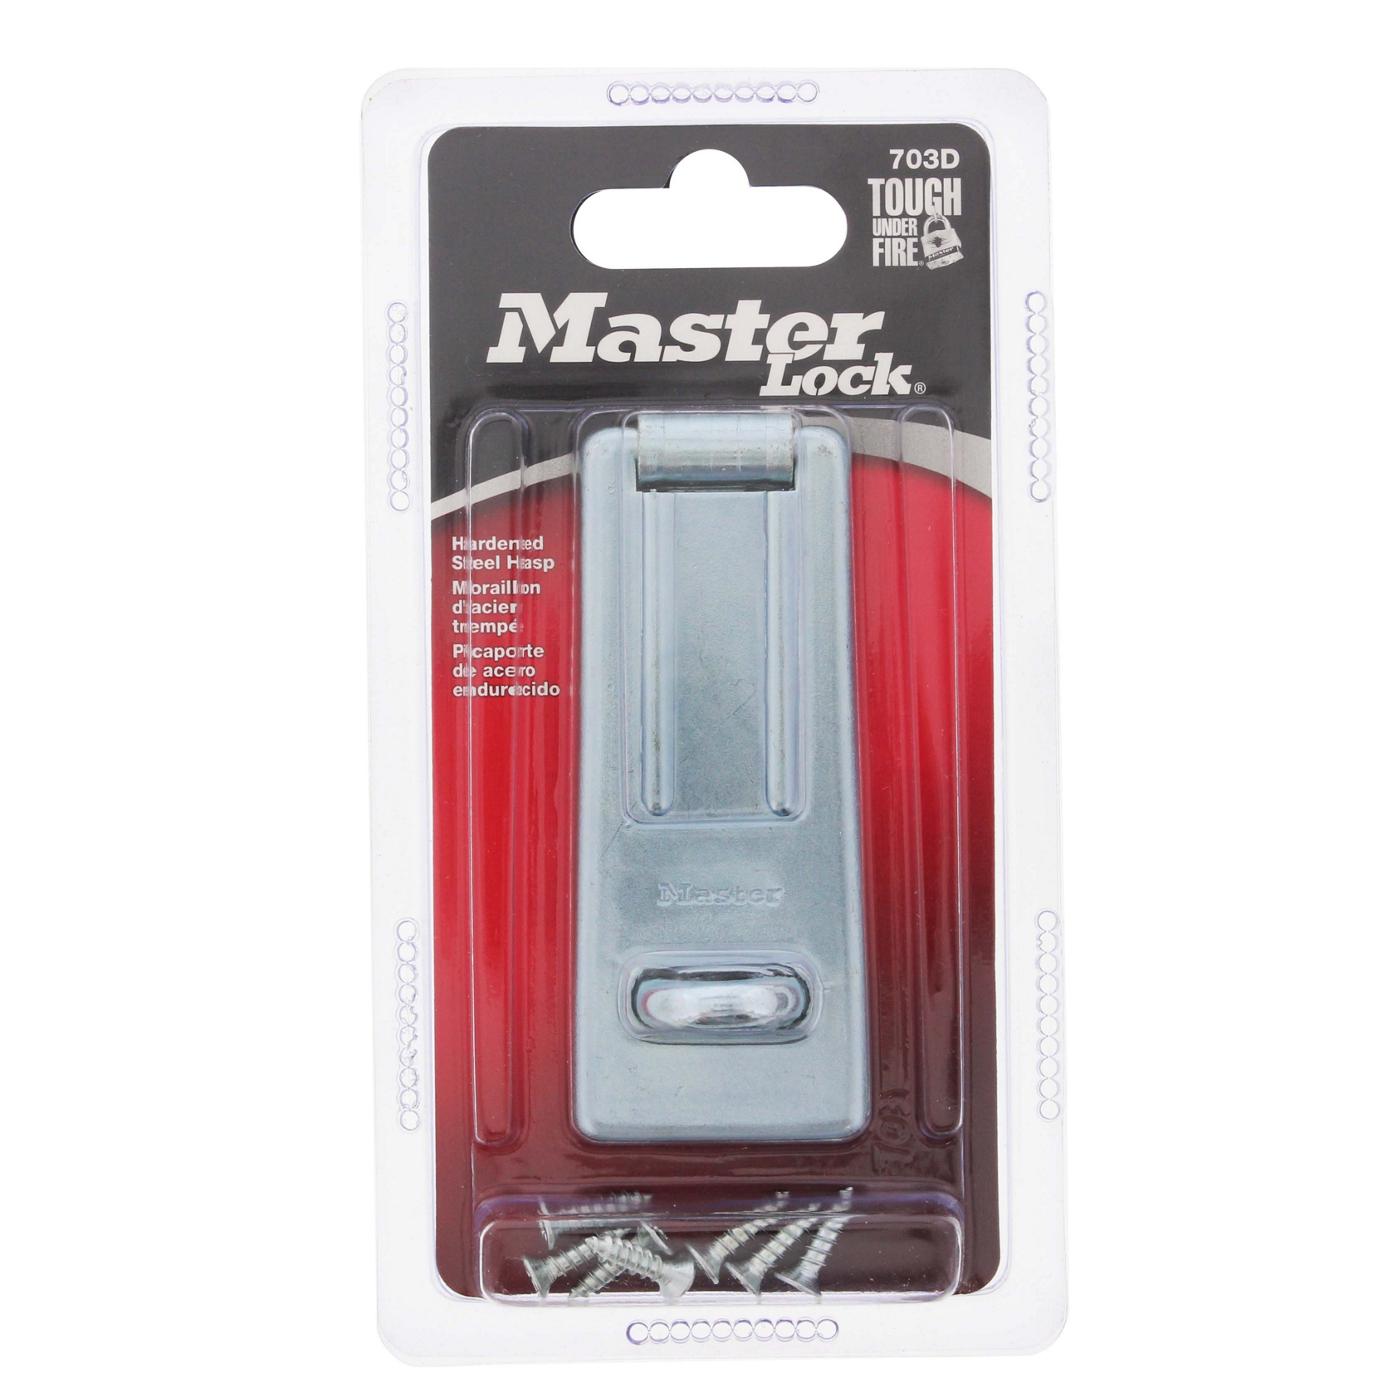 Master Lock 703D Hasp Lock; image 1 of 2